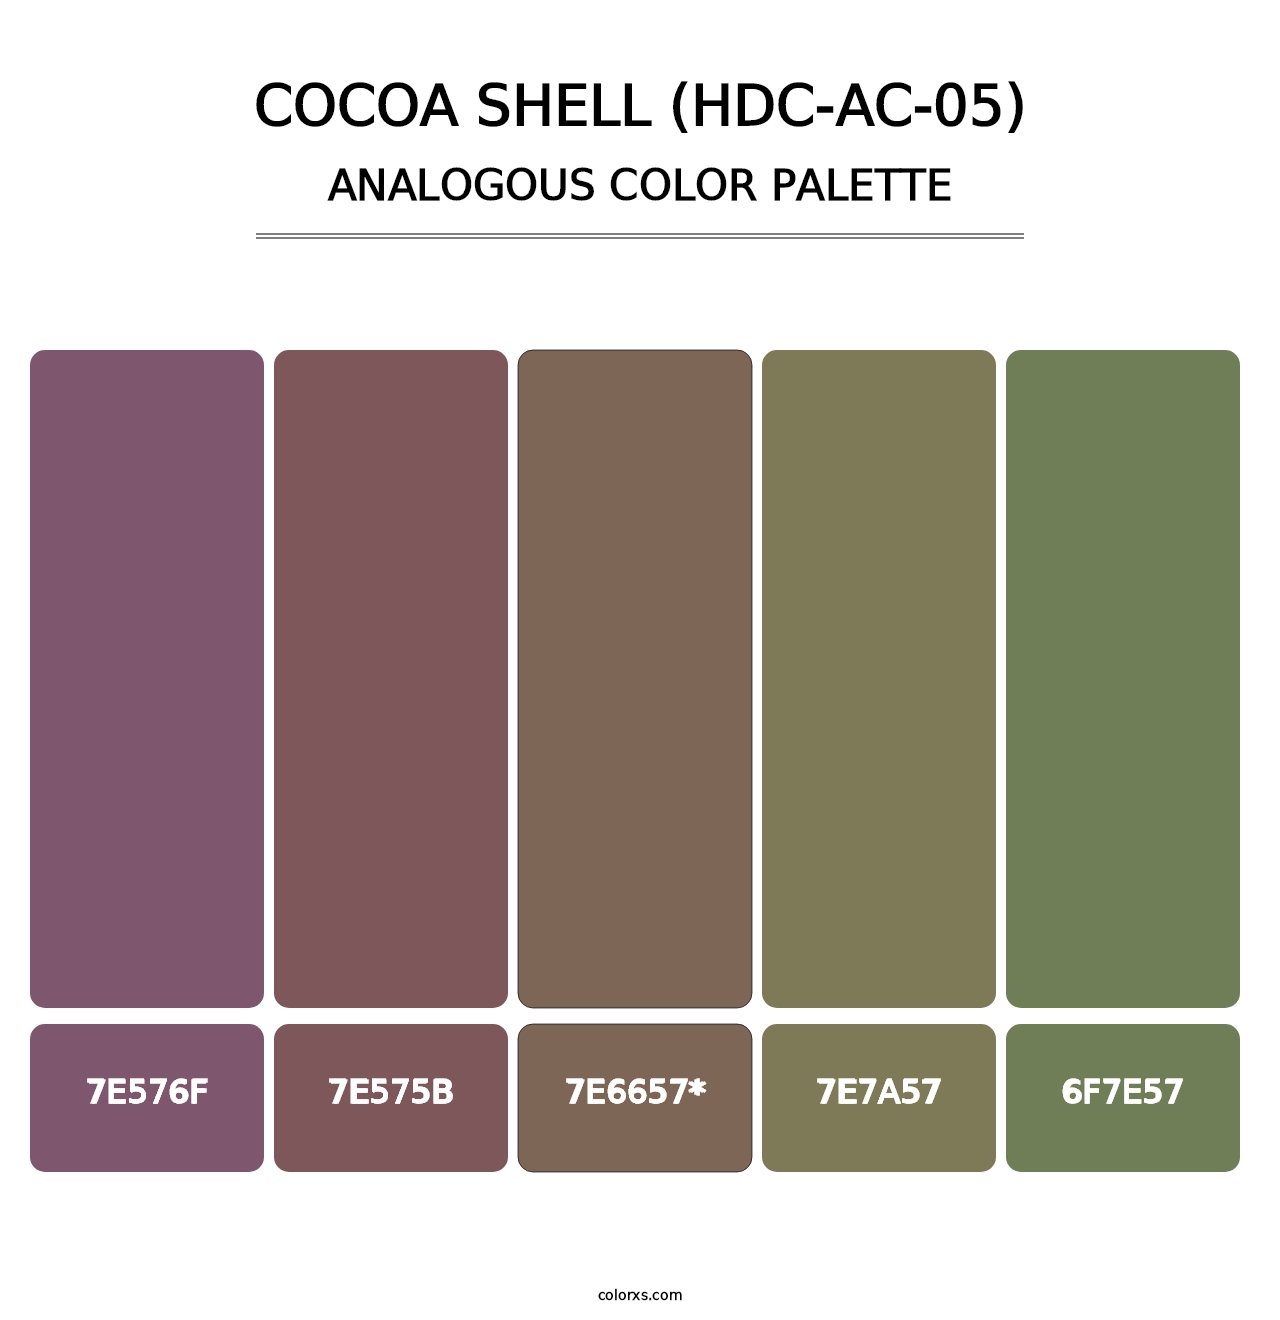 Cocoa Shell (HDC-AC-05) - Analogous Color Palette